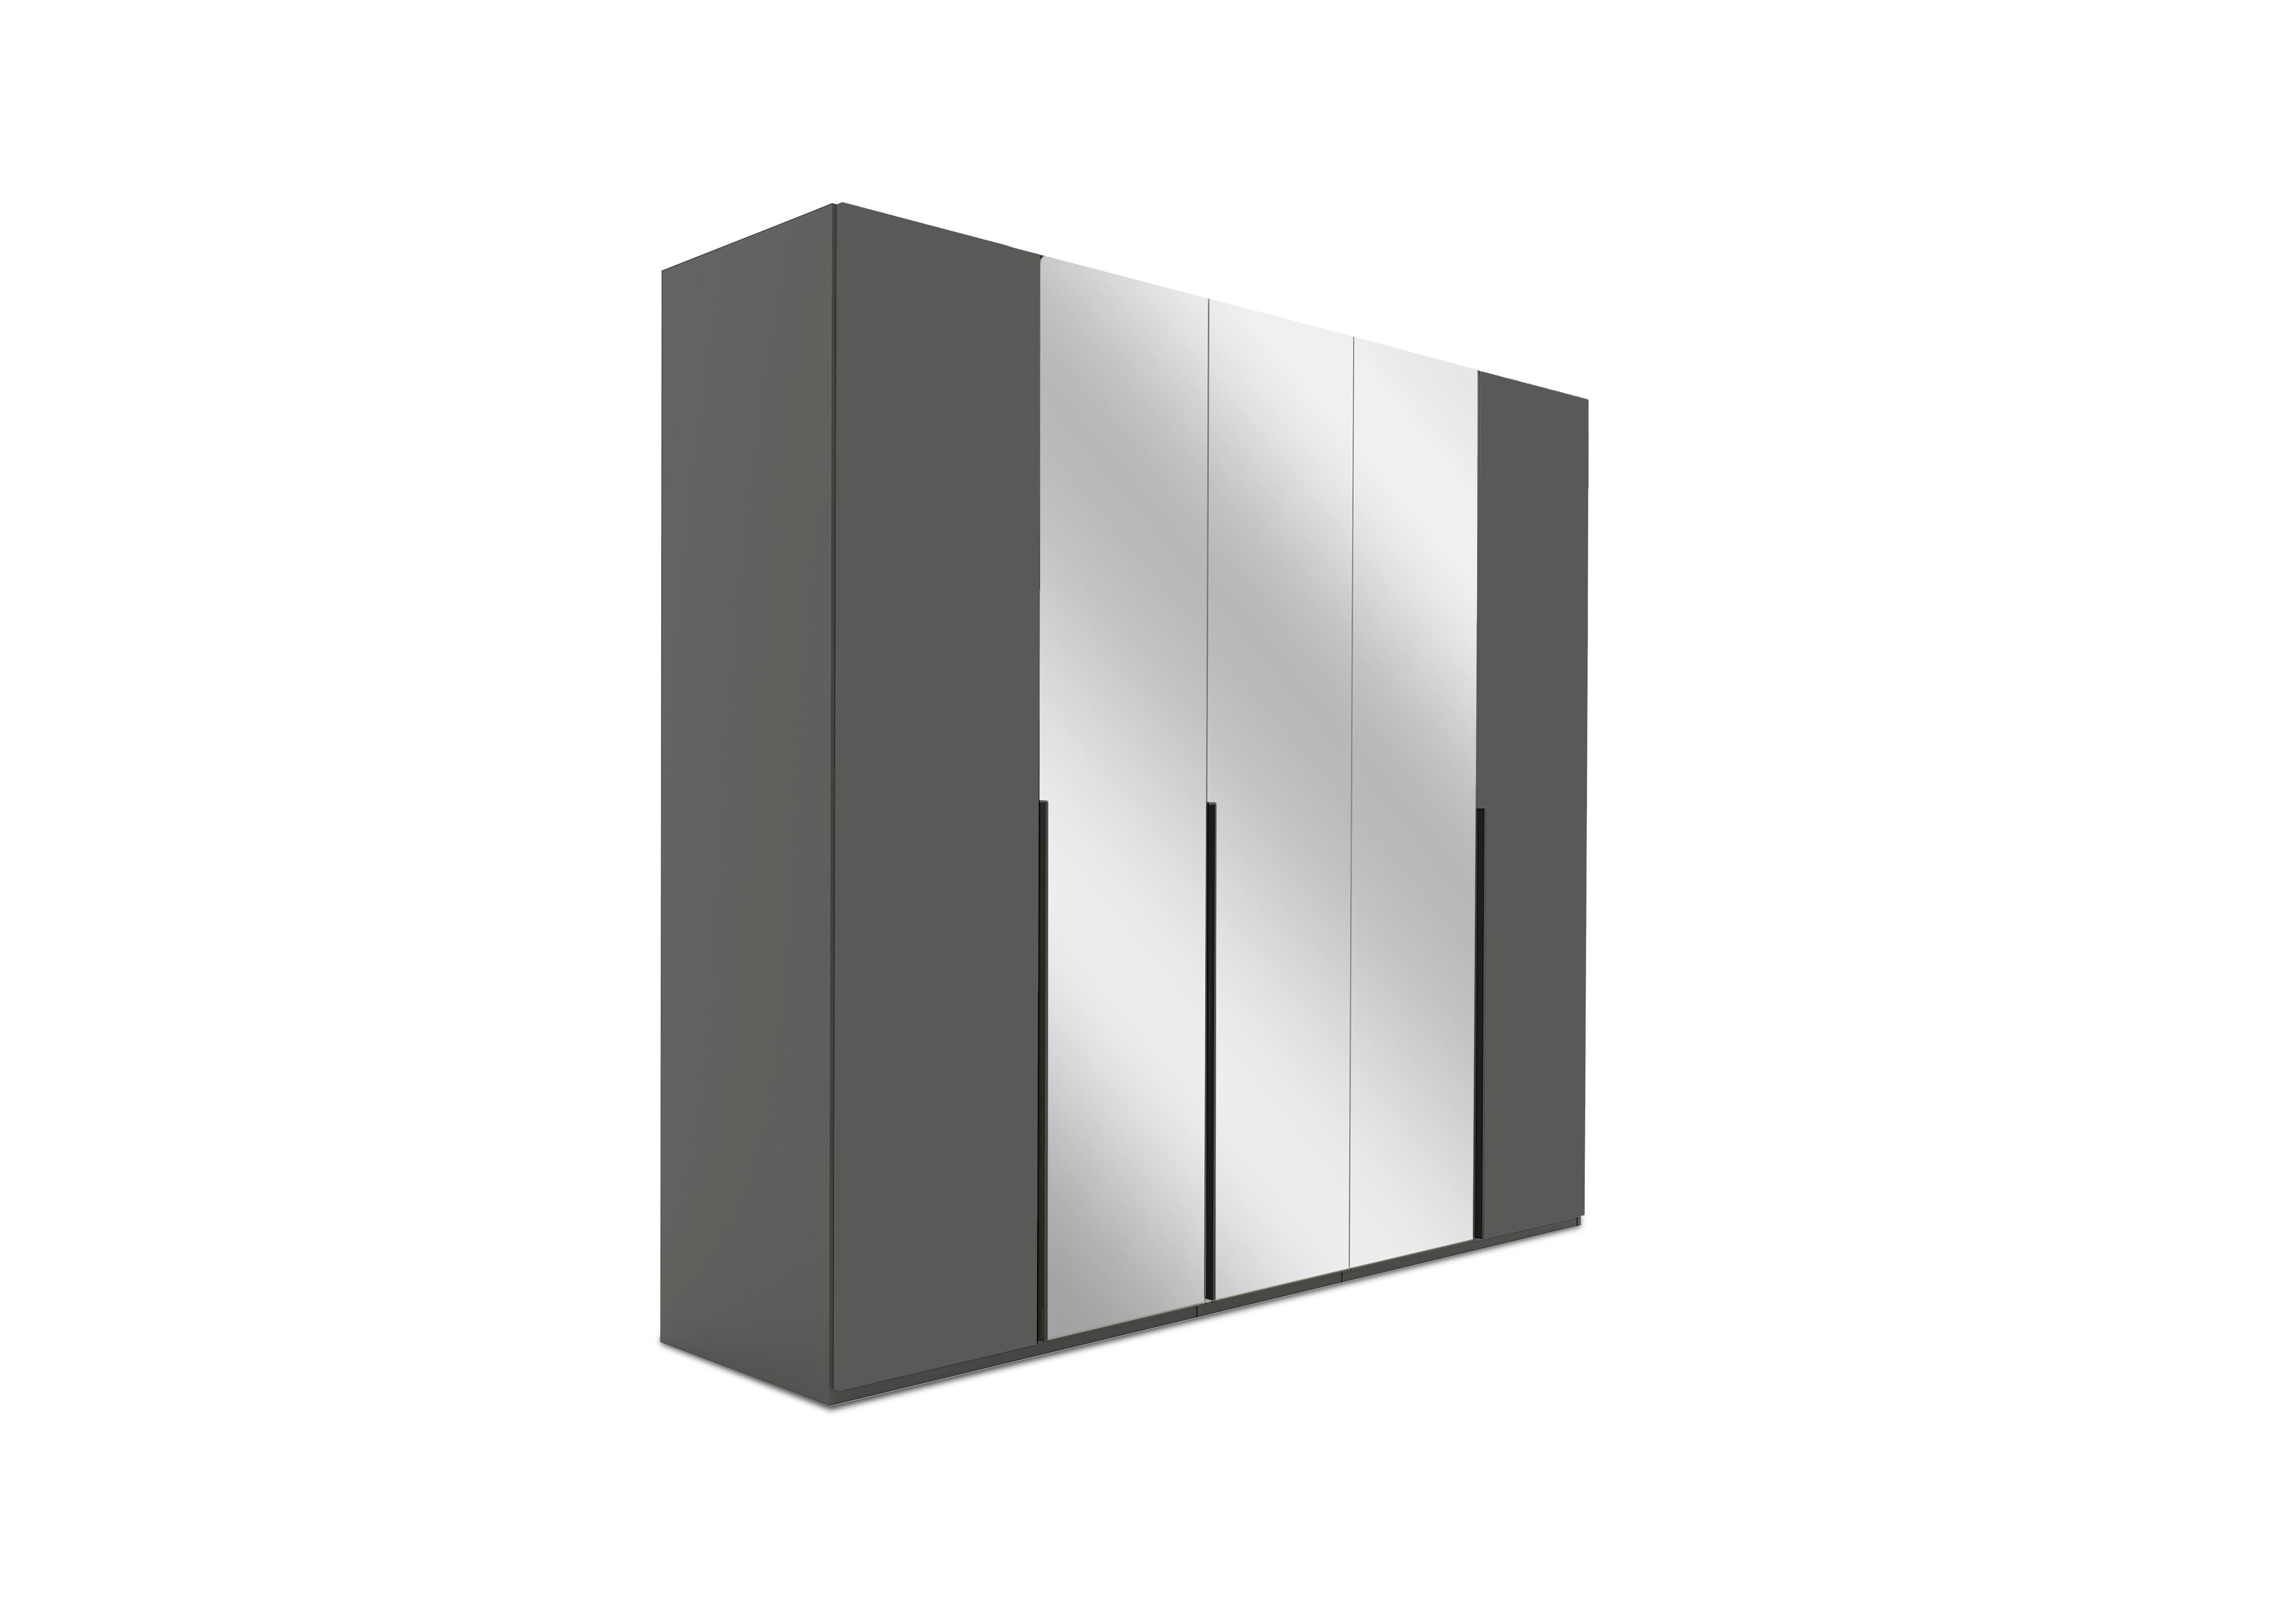 Cora 5 Door Hinged Wardrobe With Mirror Doors in A-Basalt B-Mirror Crc-Basalt on Furniture Village